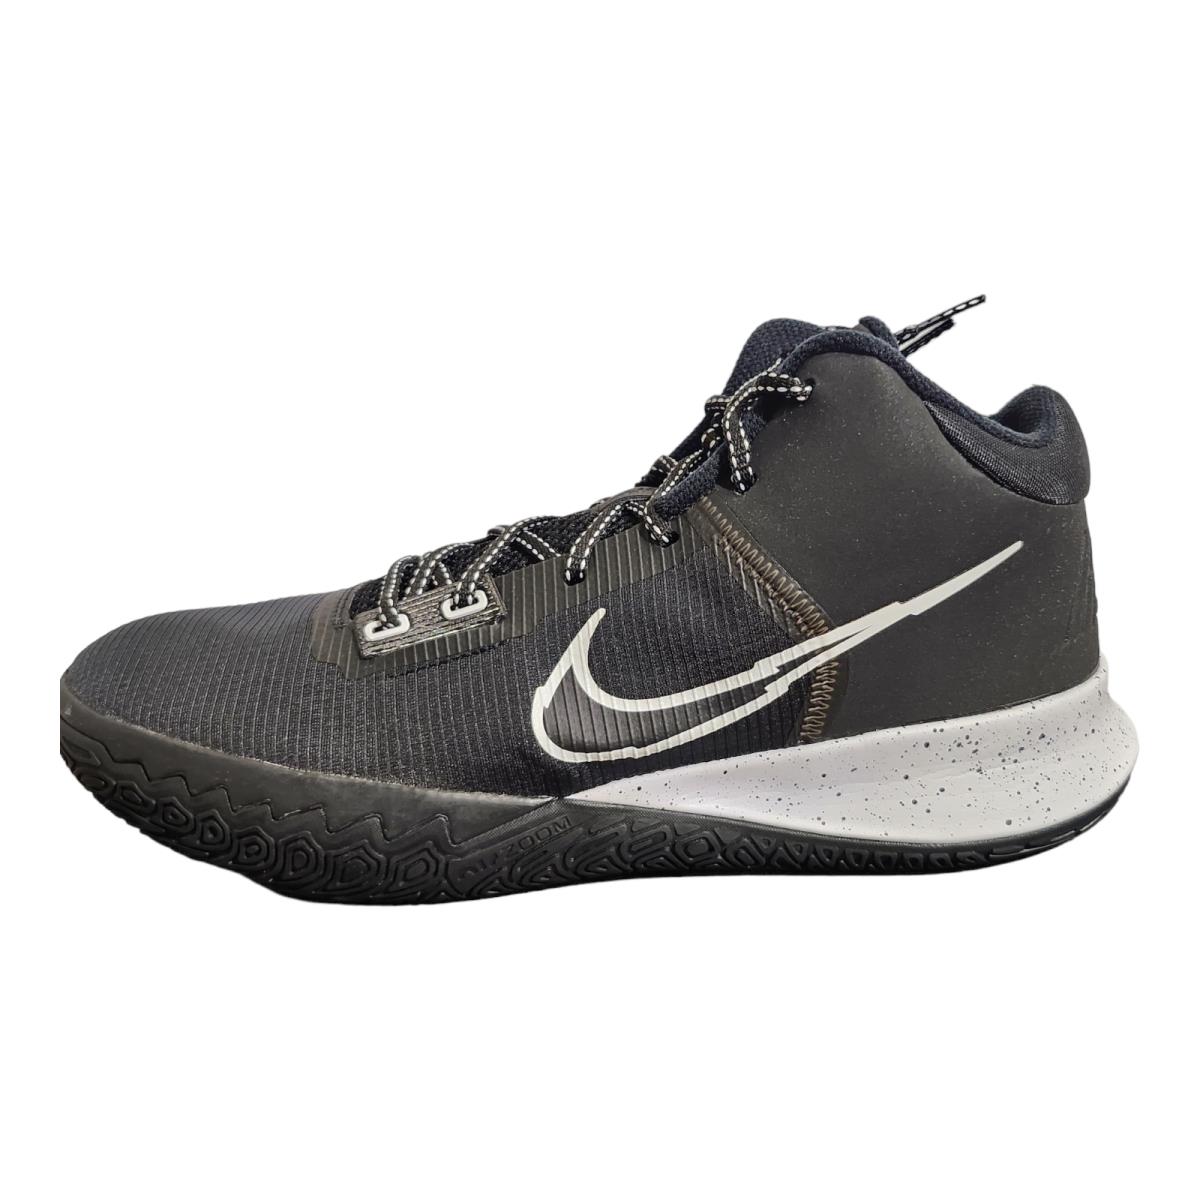 Nike Kyrie Flytrap IV 4 Black White Basketball Shoe Mens CT1972 001 - Black/White